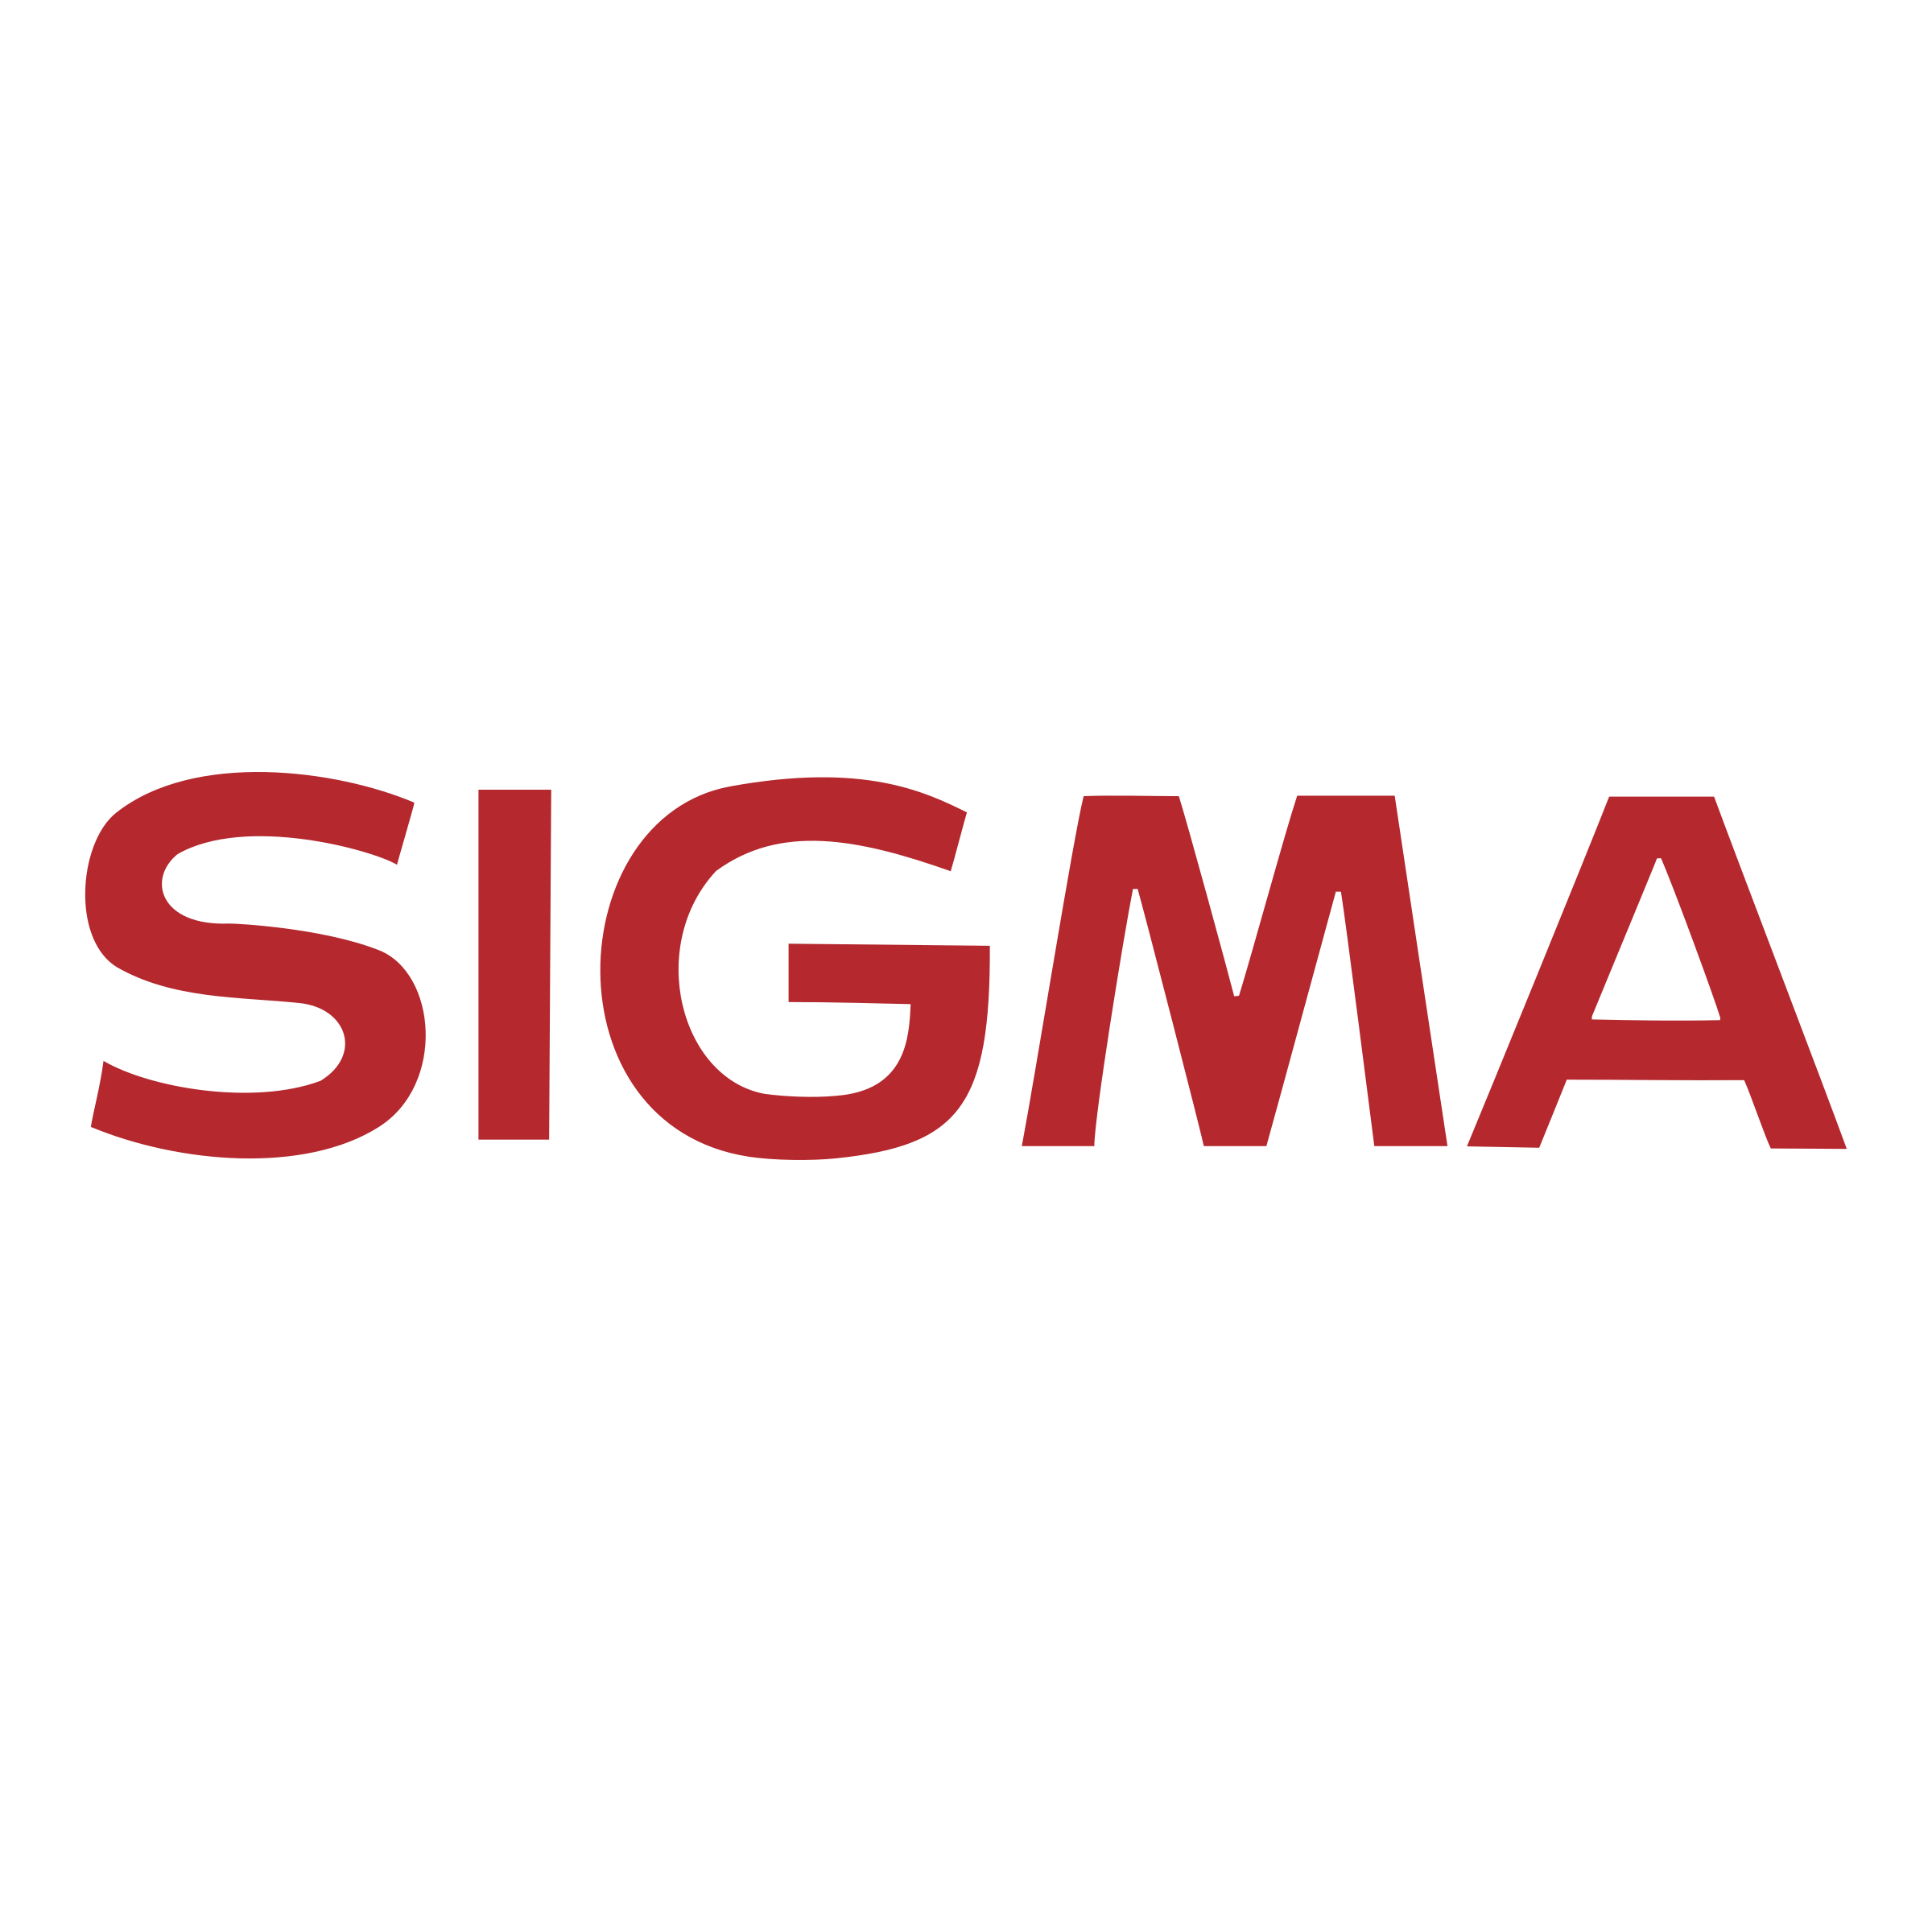 Sigma Logo - Sigma Logo PNG Transparent & SVG Vector - Freebie Supply